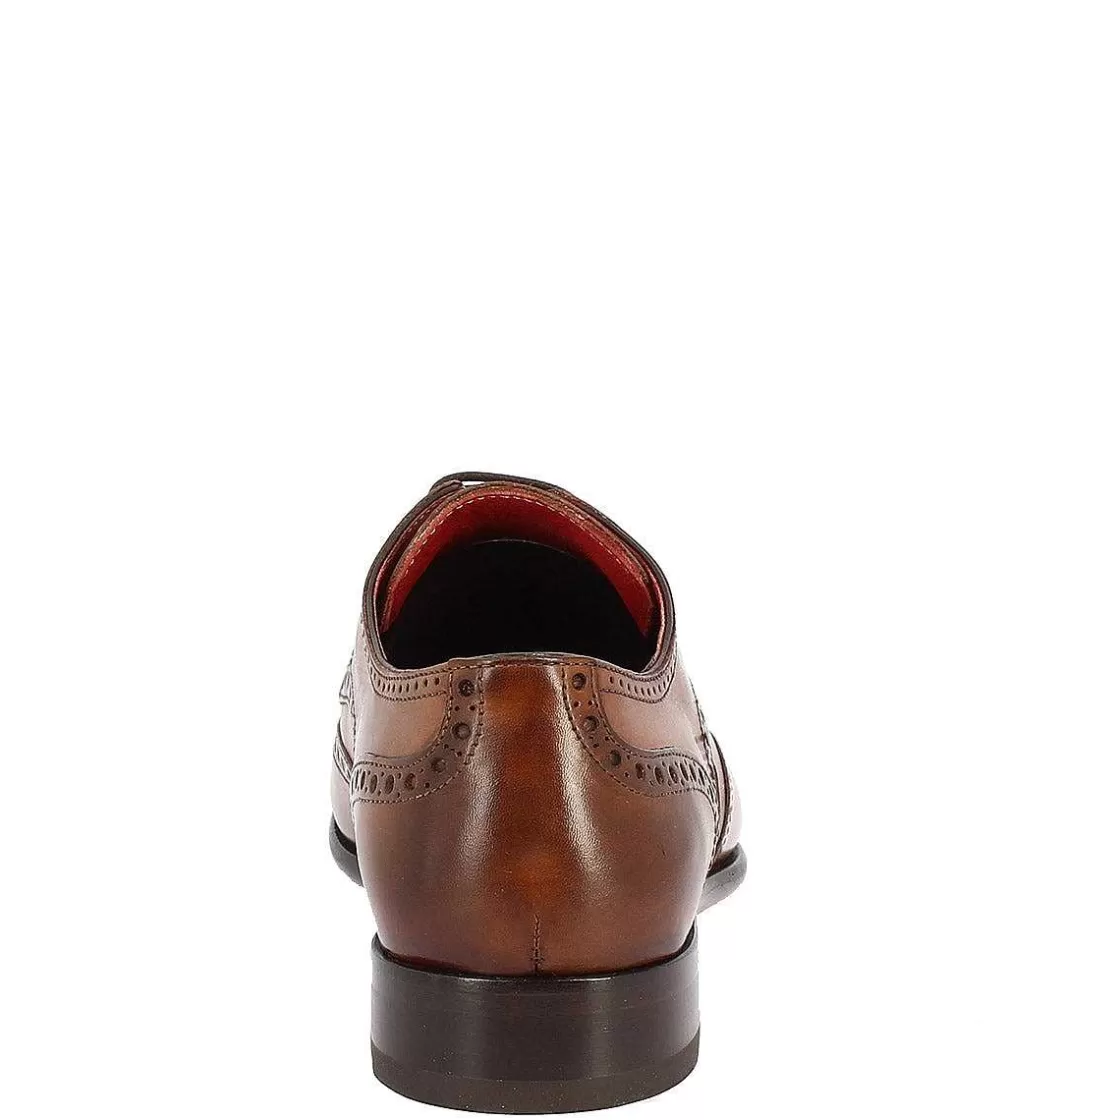 Leonardo Men'S Brogue Brogue Shoes Handmade In Brandy Leather Cheap